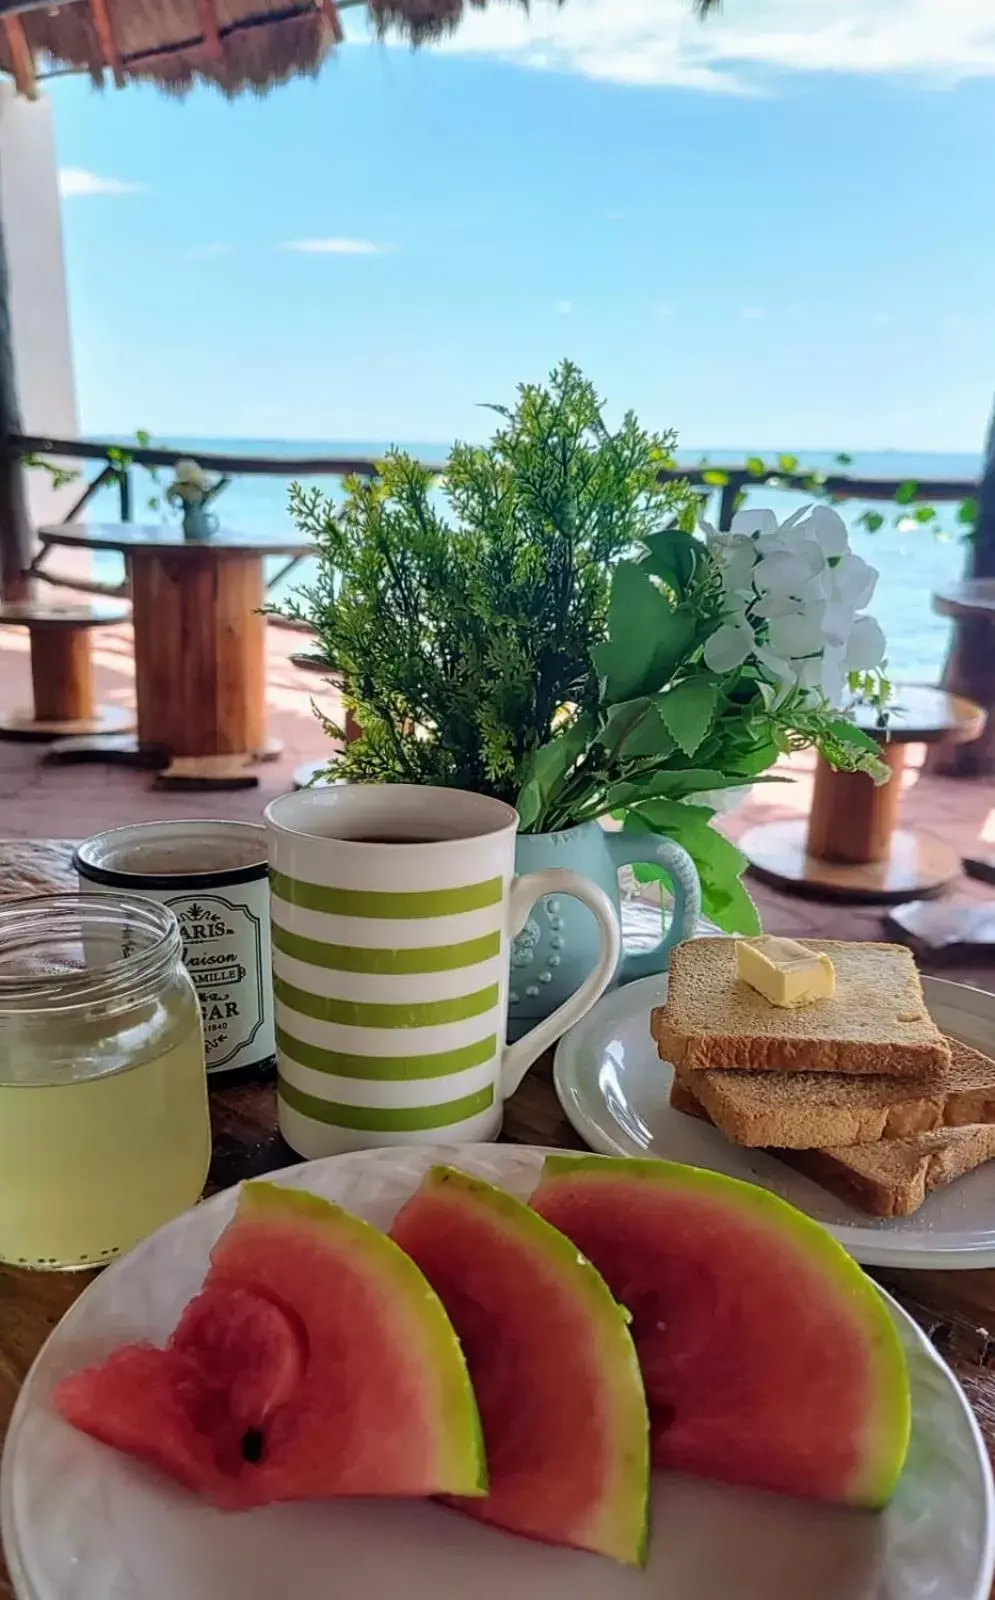 Breakfast in Casa Caribe Cancun